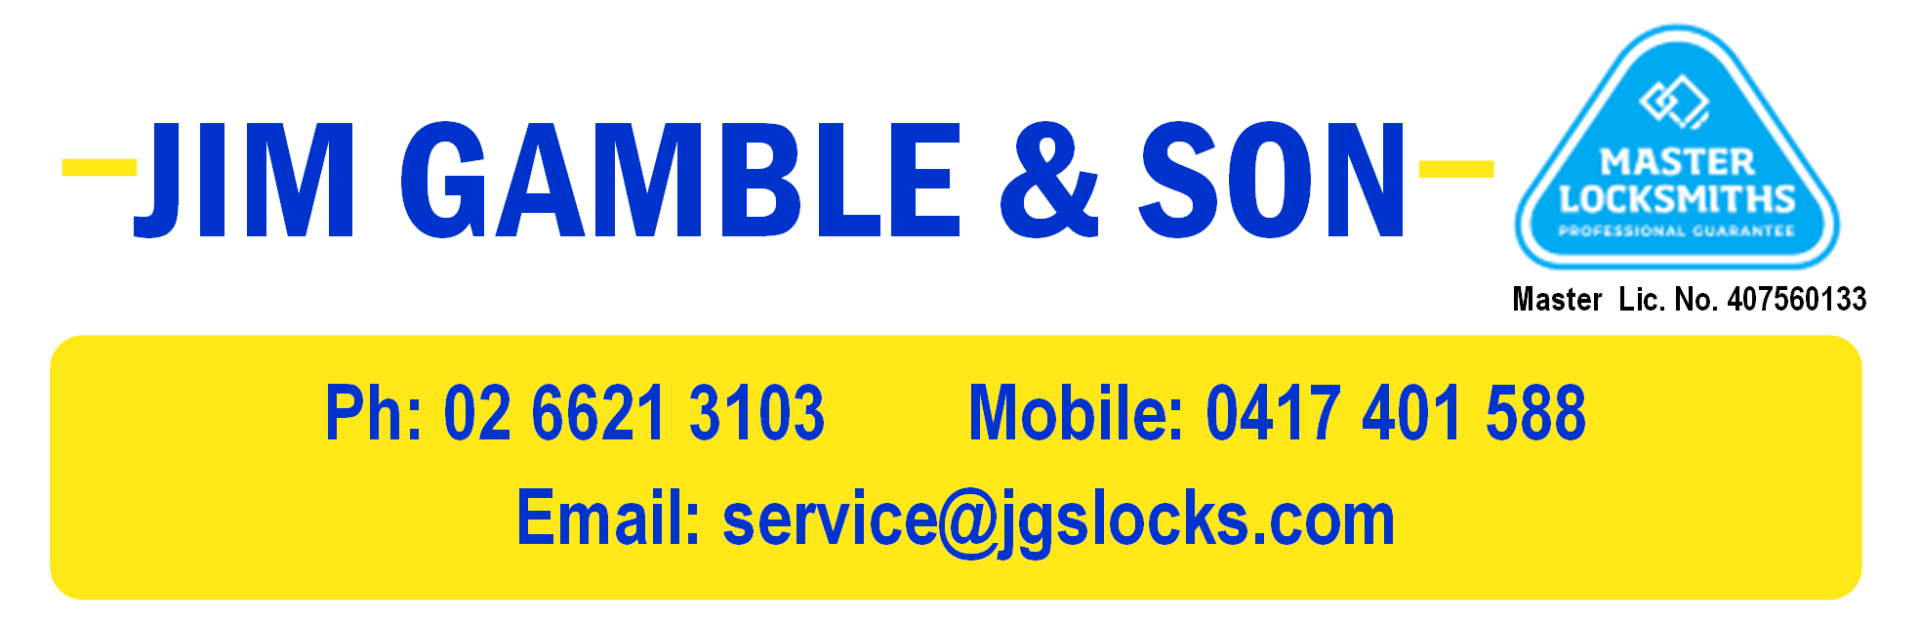 Jim Gamble & Son Locksmiths: Locksmith Services in Lismore